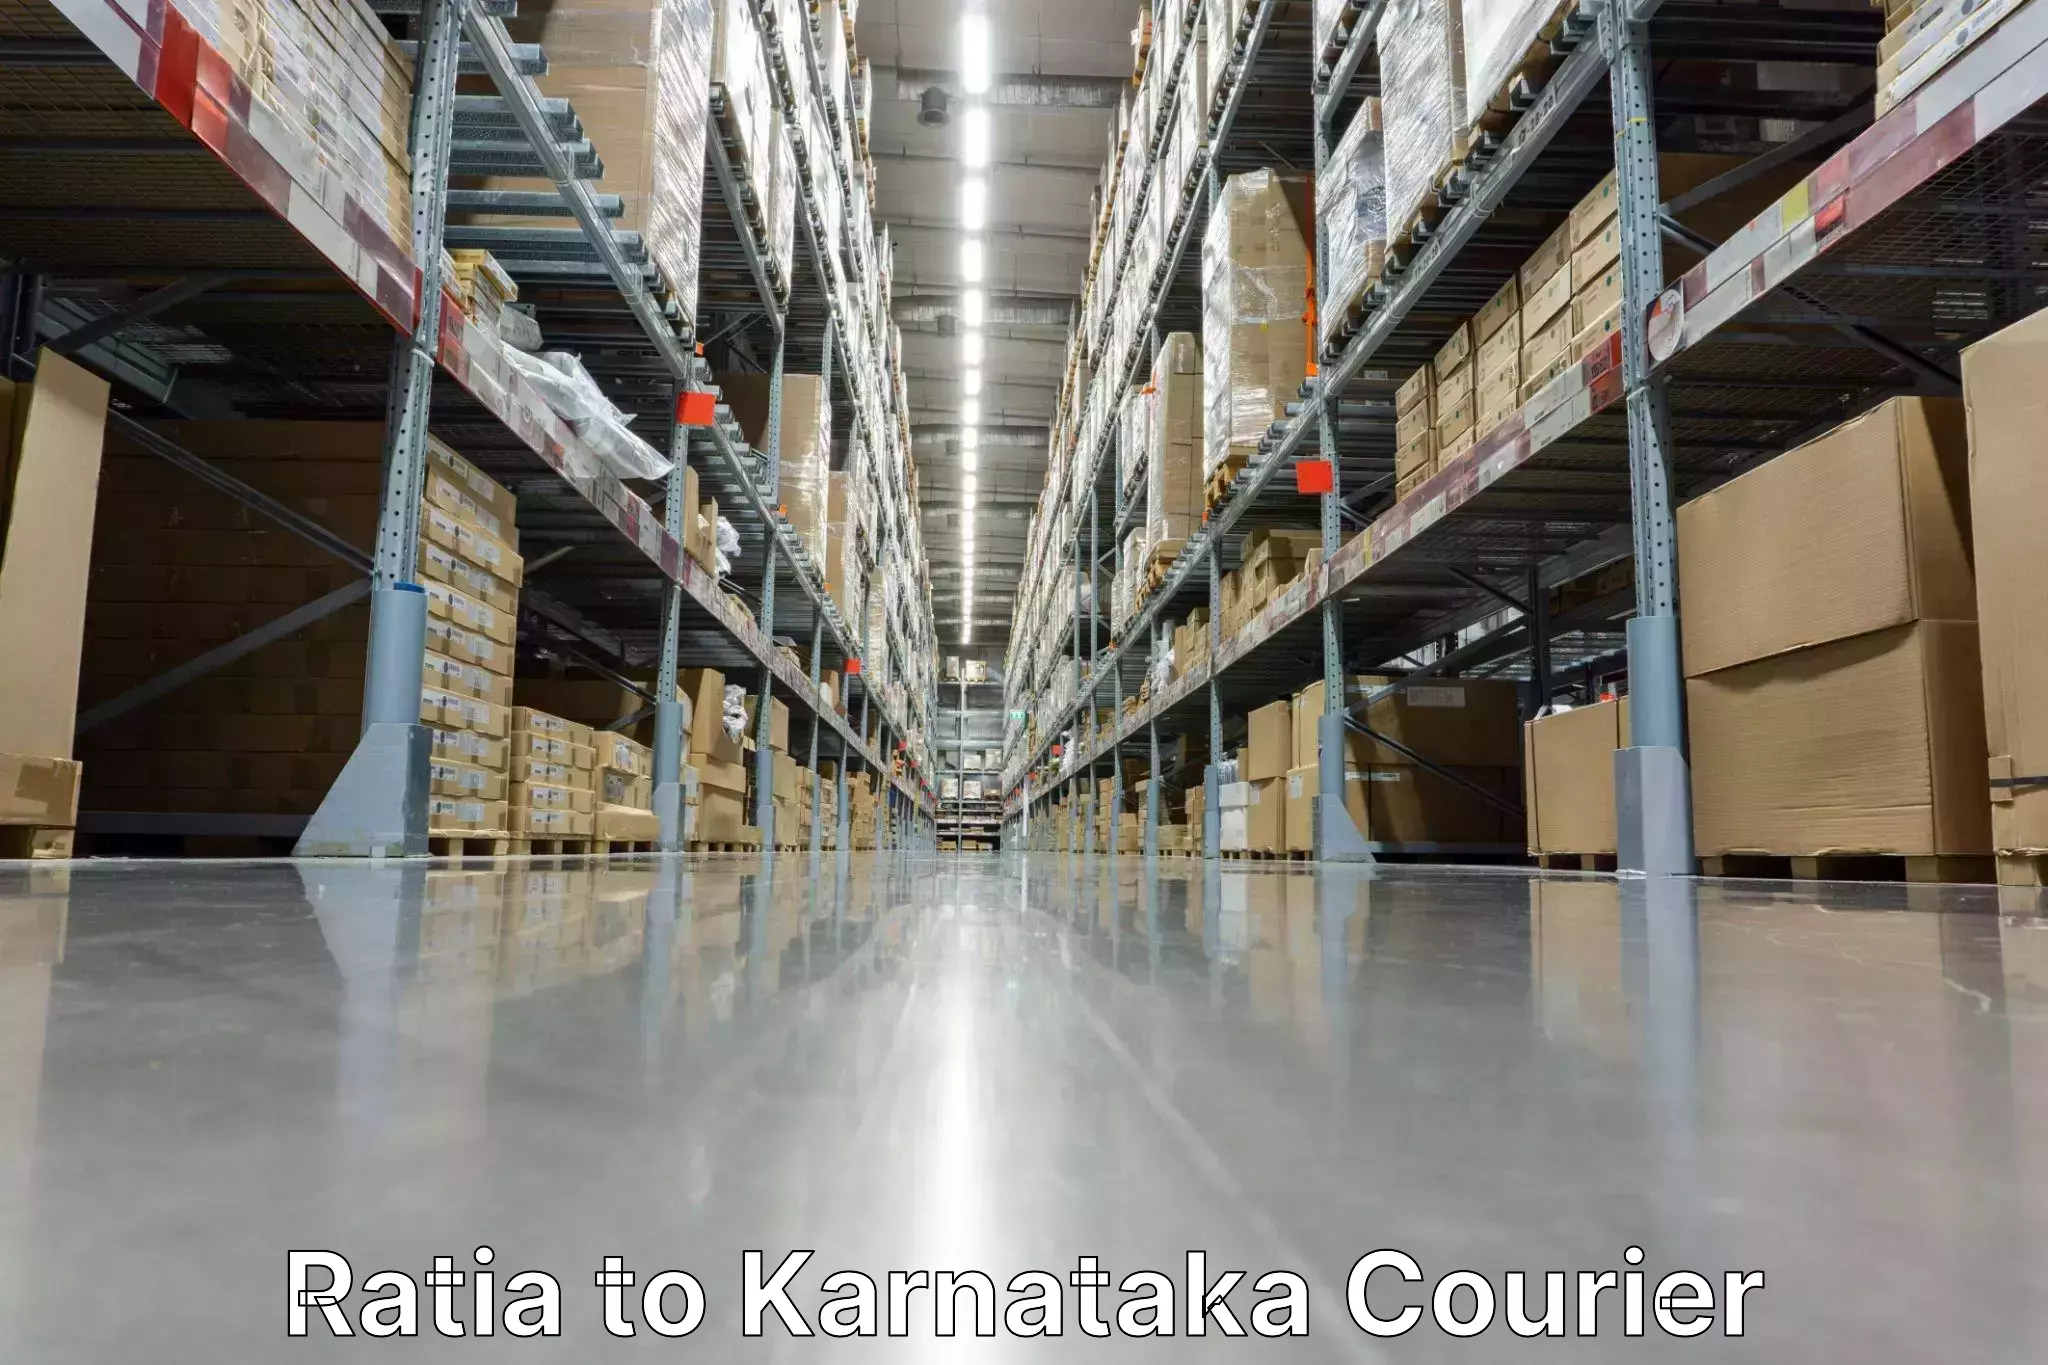 On-call courier service Ratia to Ramanathapura